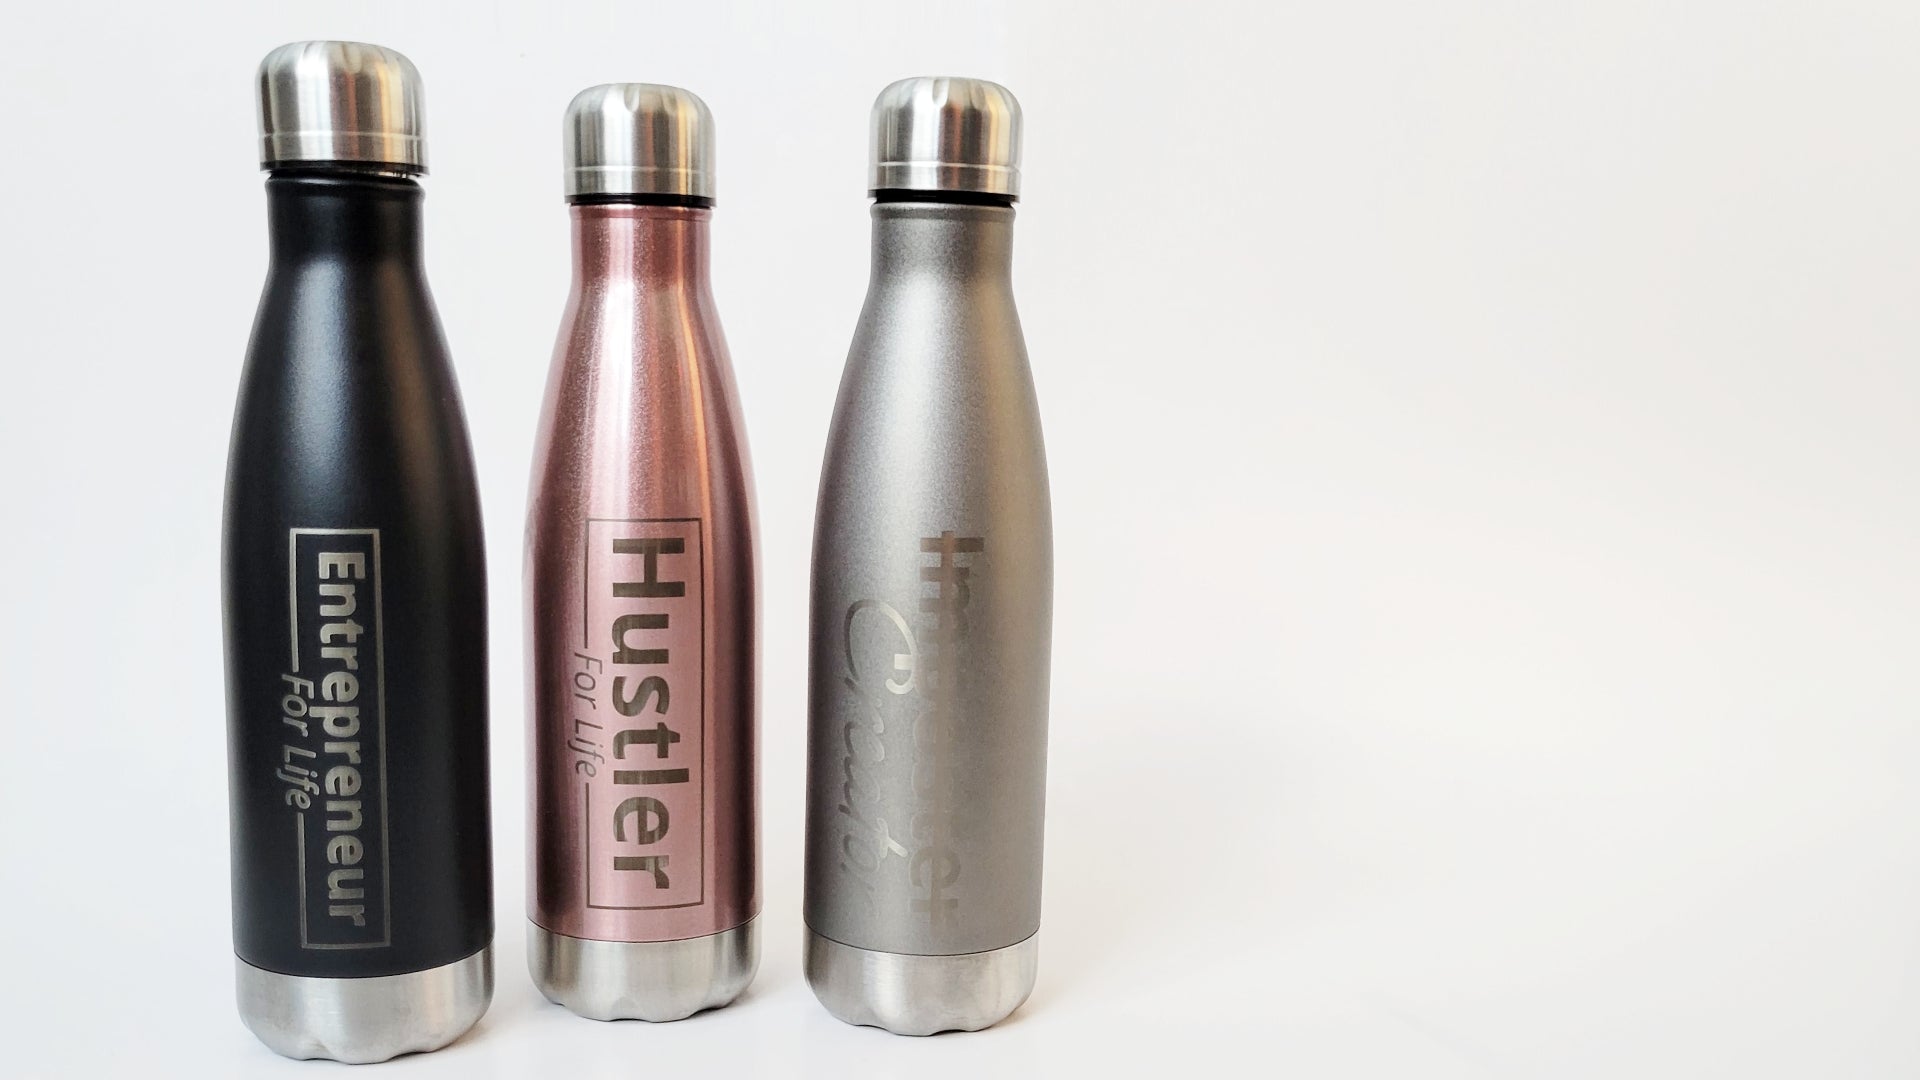 "Entrepreneur" Sport Water Bottles - High Quality Stainless Steel, Insulated, Dual Walled, Vacuum Sealed Water Bottles - Miller IP